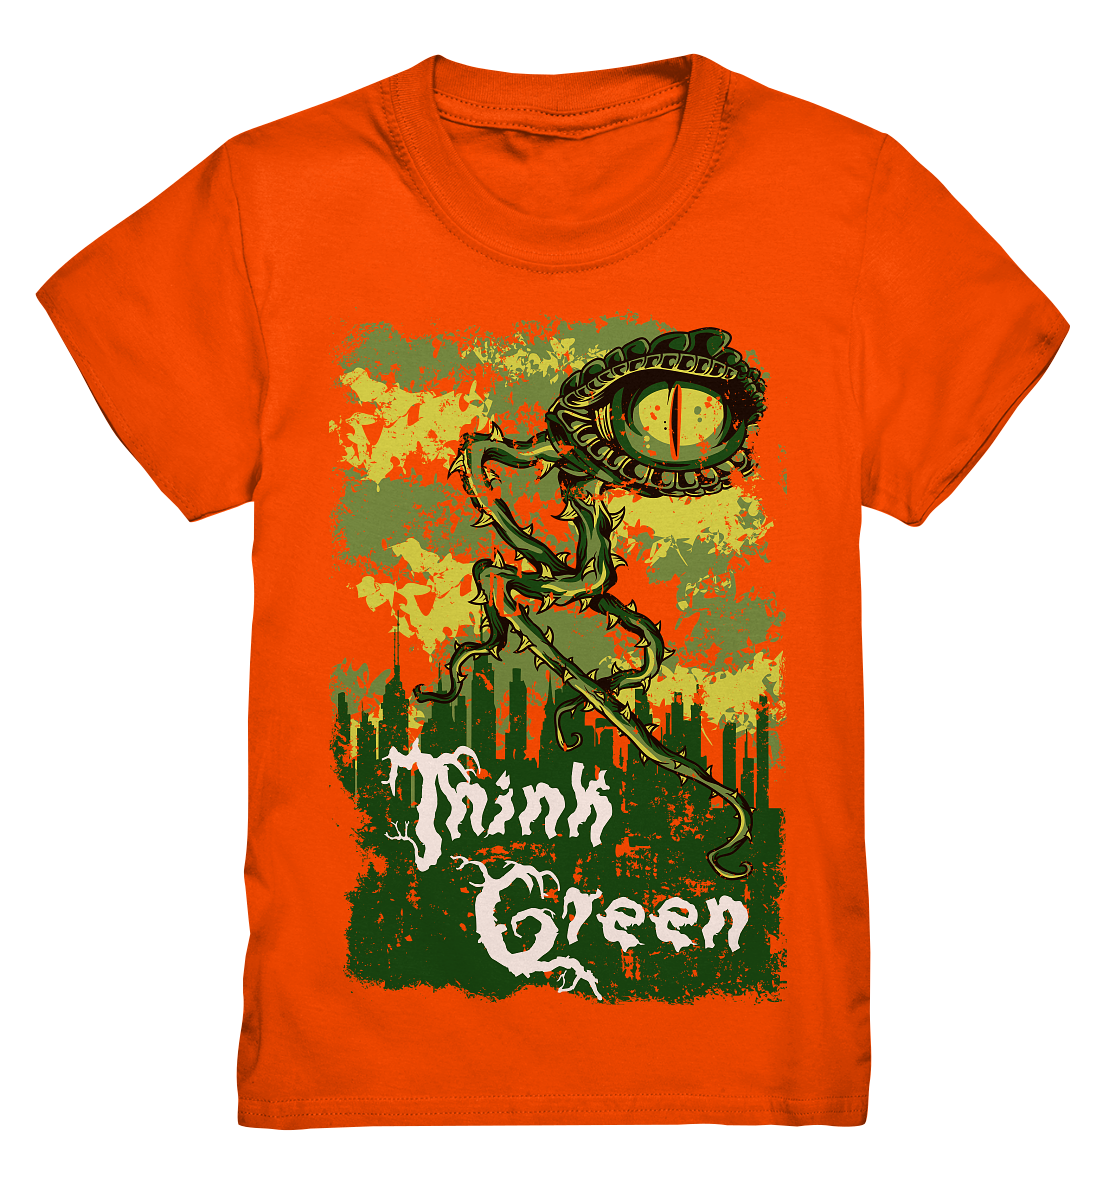 Think Green - Kids Premium Shirt